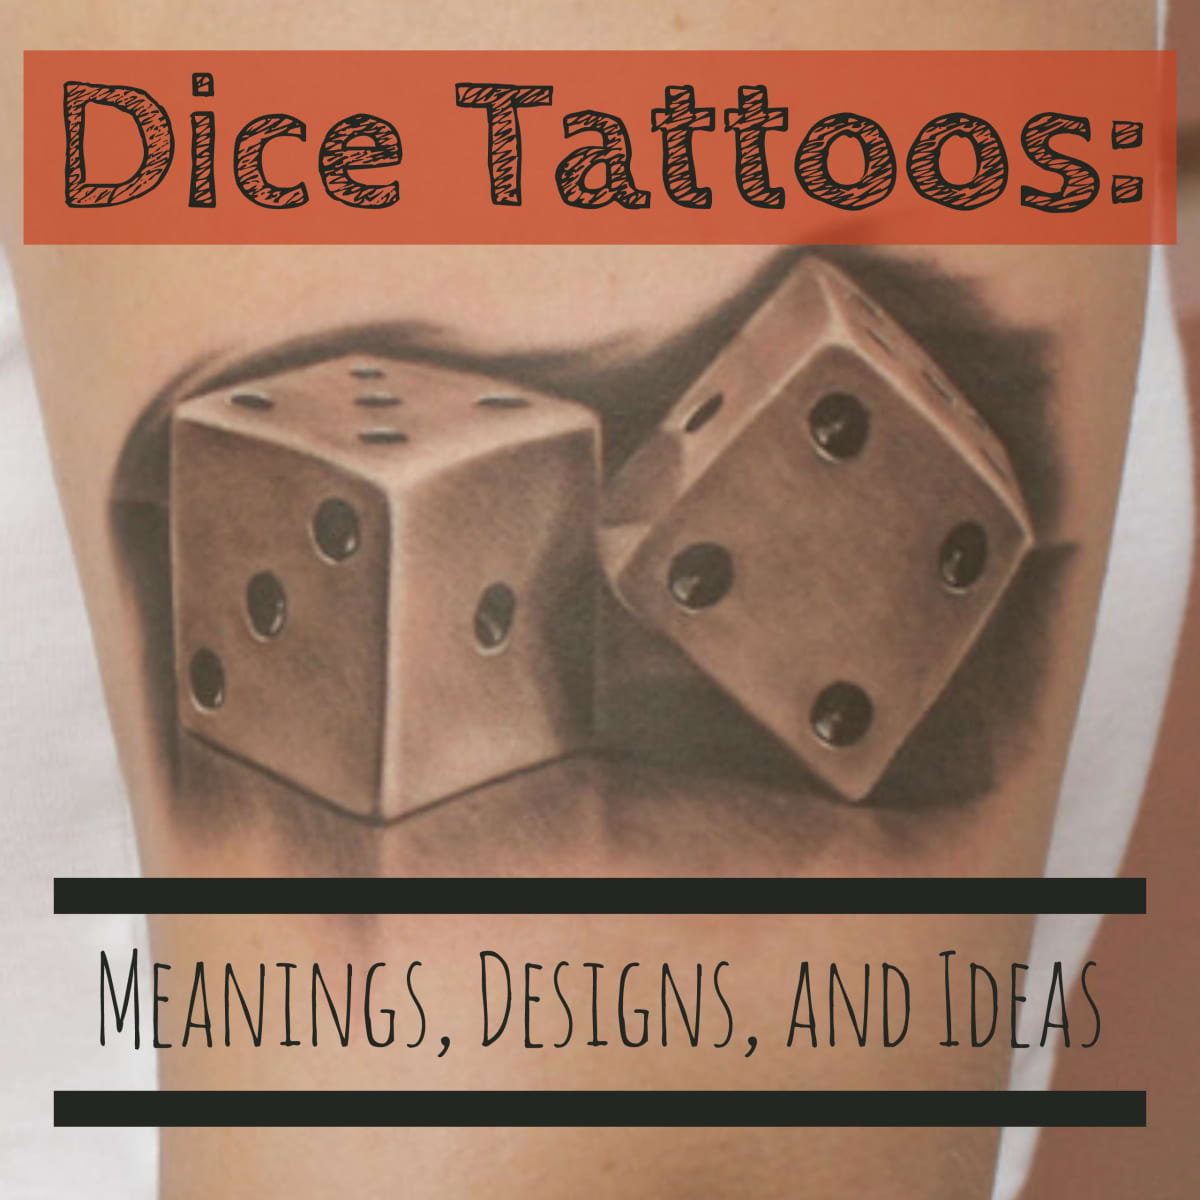 75 Dice Tattoos For Men  The Gamblers Paradise Of Life  Dice tattoo  Card tattoo Tattoos for guys